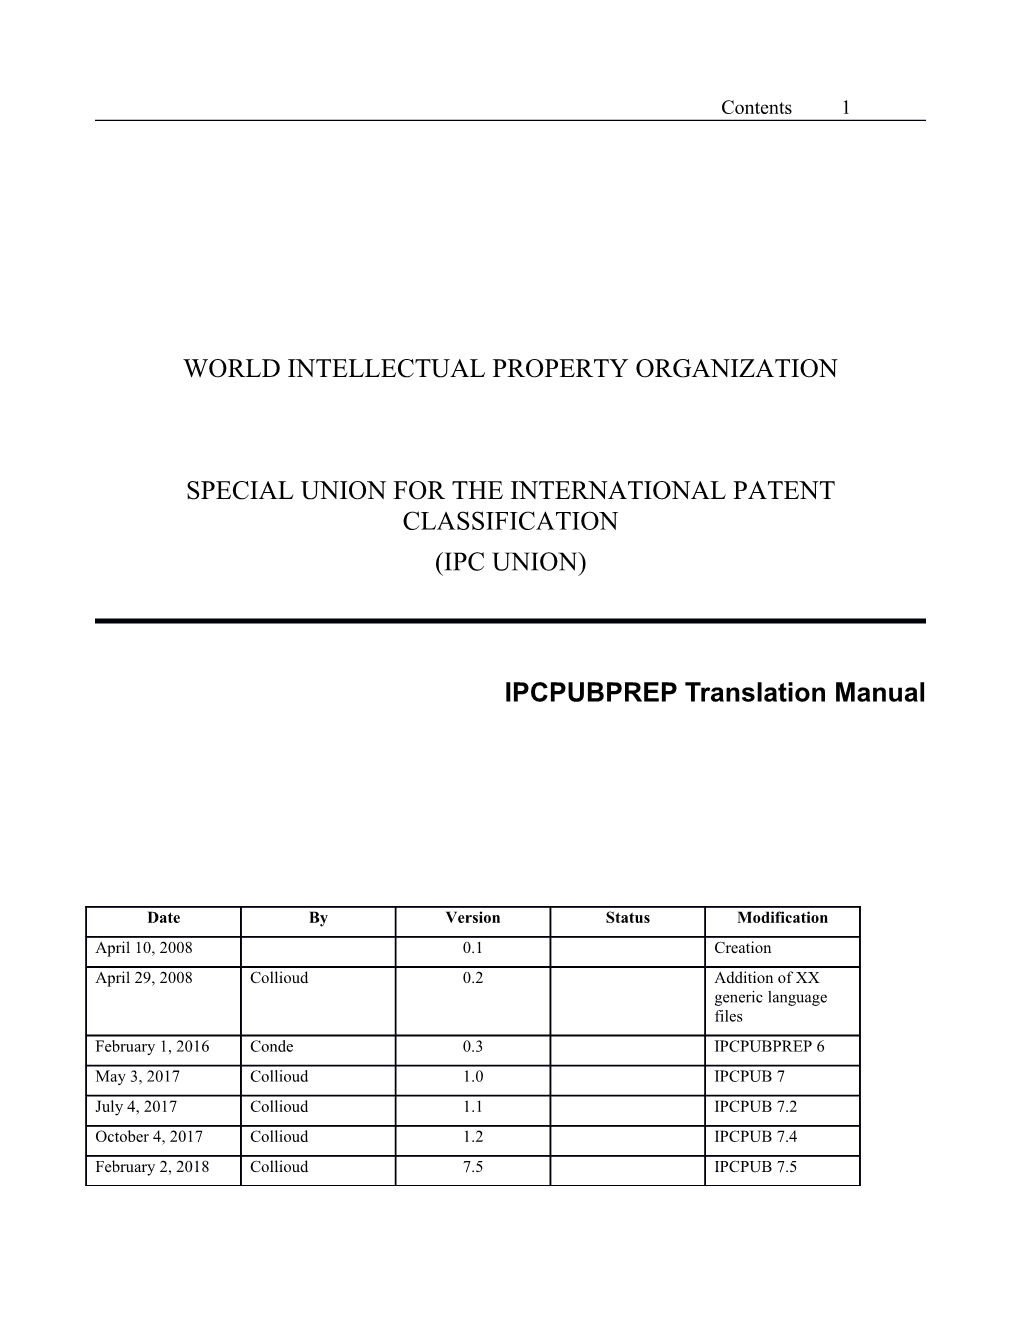 IPCPUBPREP Translation Manual